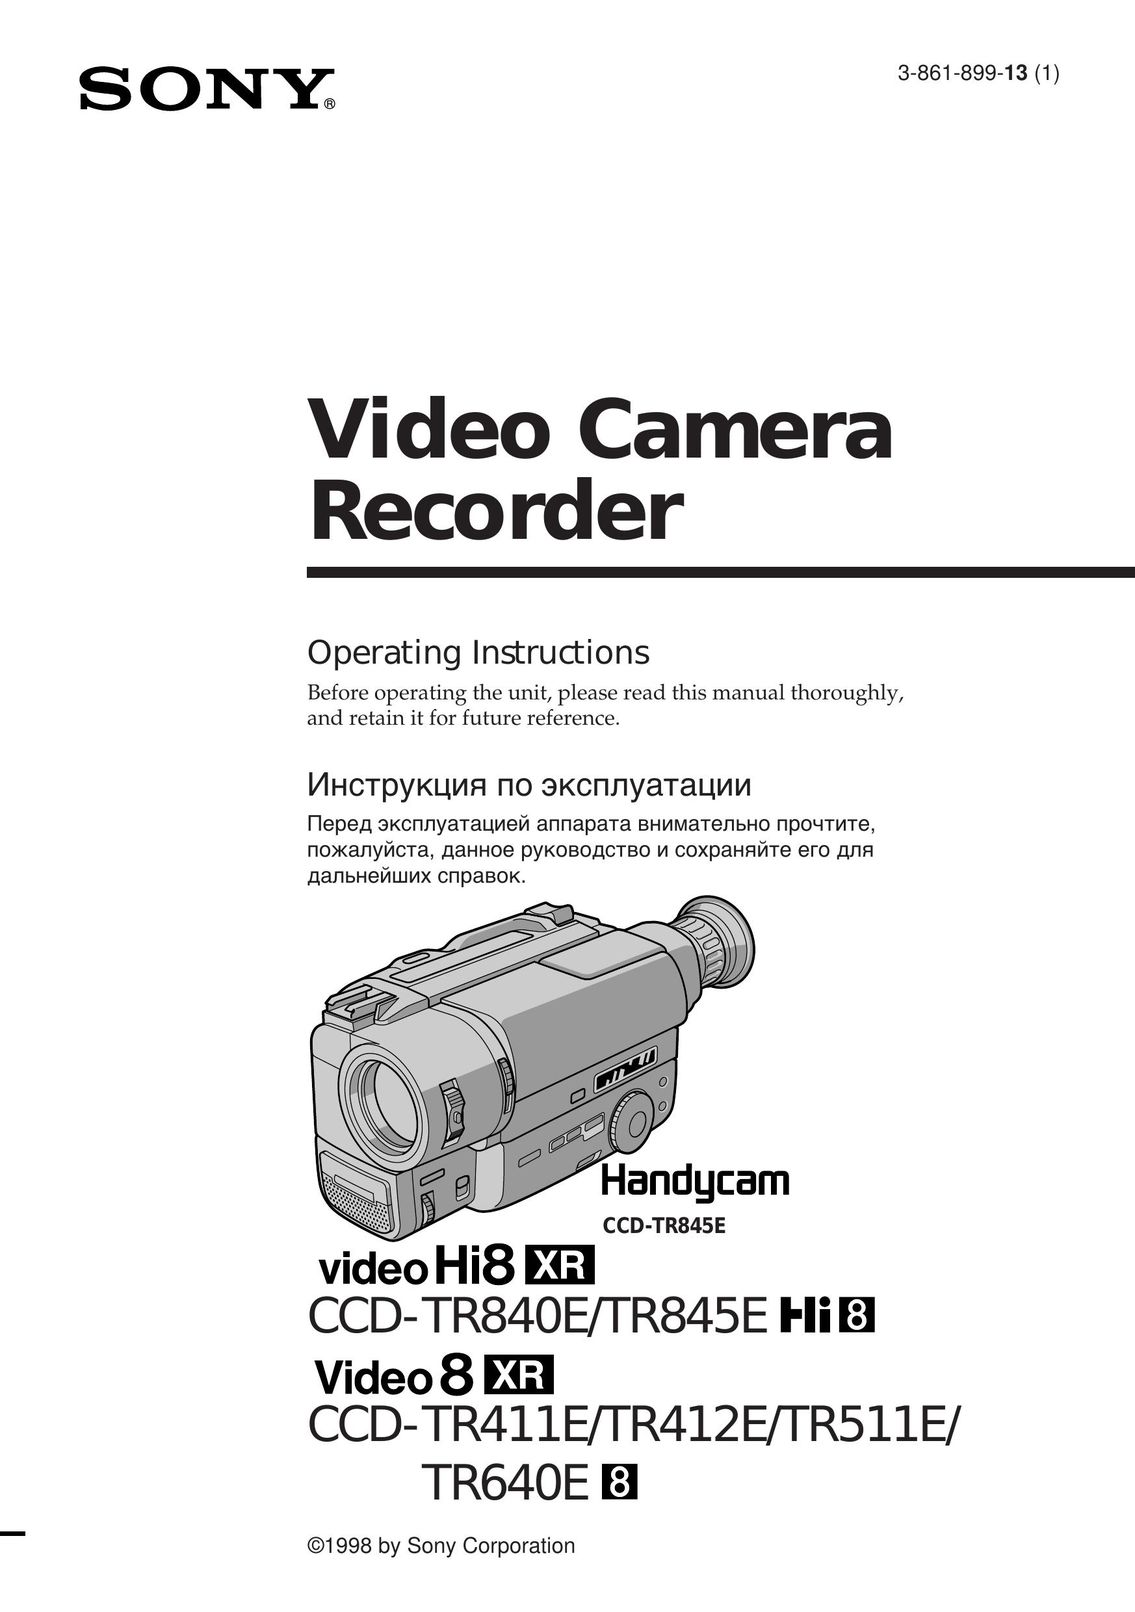 Sony CCD-TR640E VCR User Manual